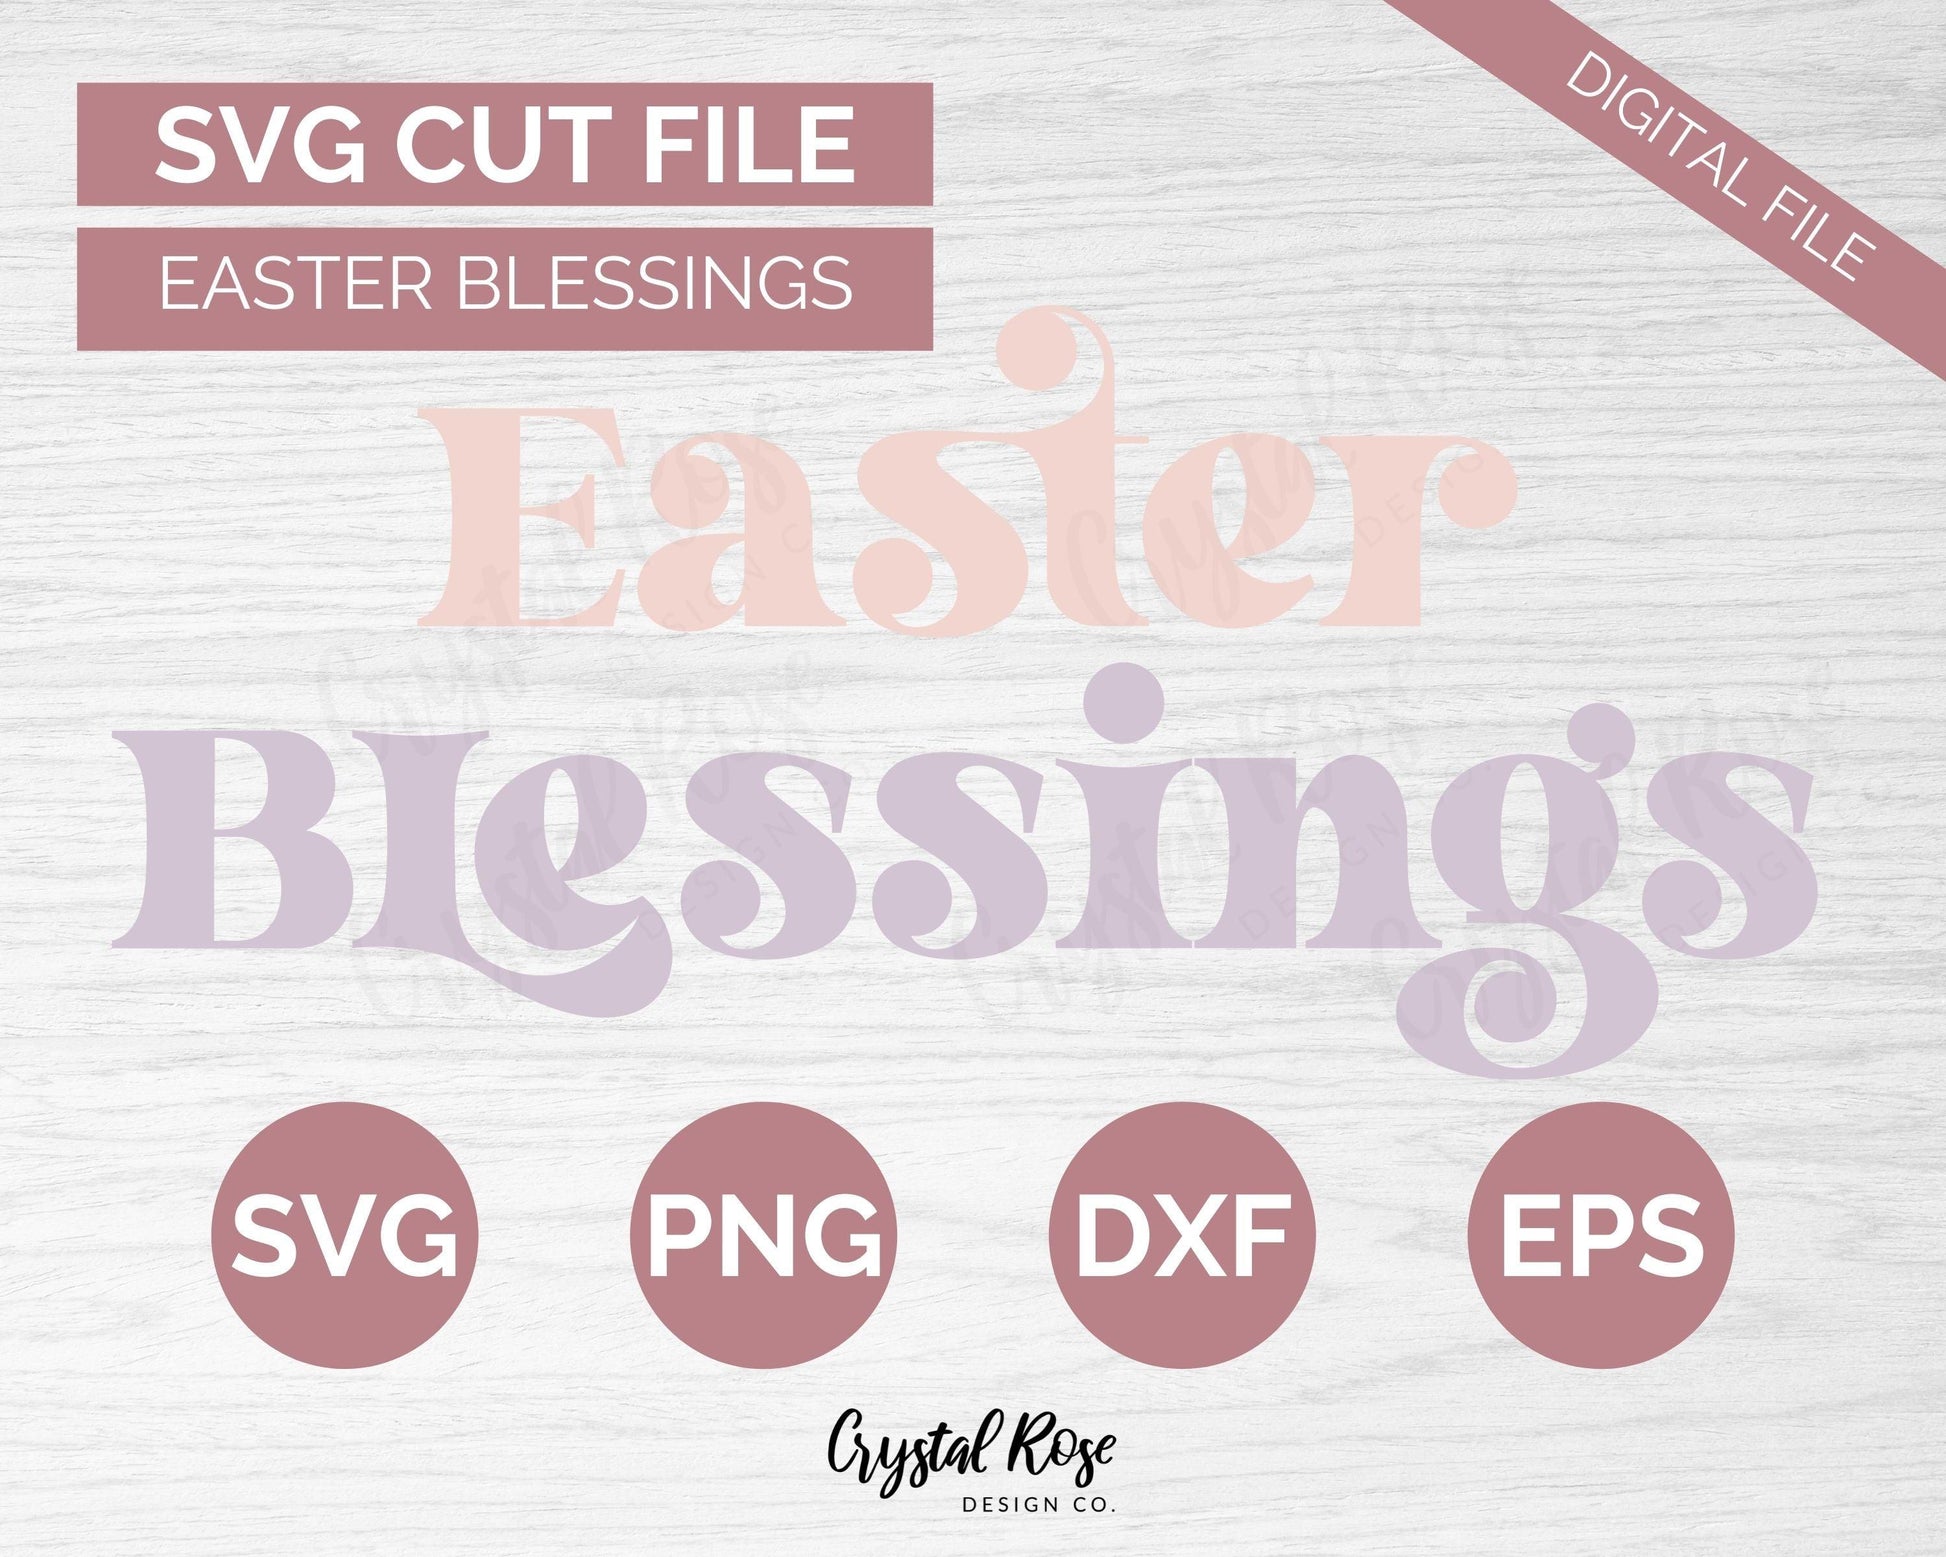 Easter Blessings SVG, Easter SVG, Digital Download, Cricut, Silhouette, Glowforge (includes svg/png/dxf/eps) - Crystal Rose Design Co.